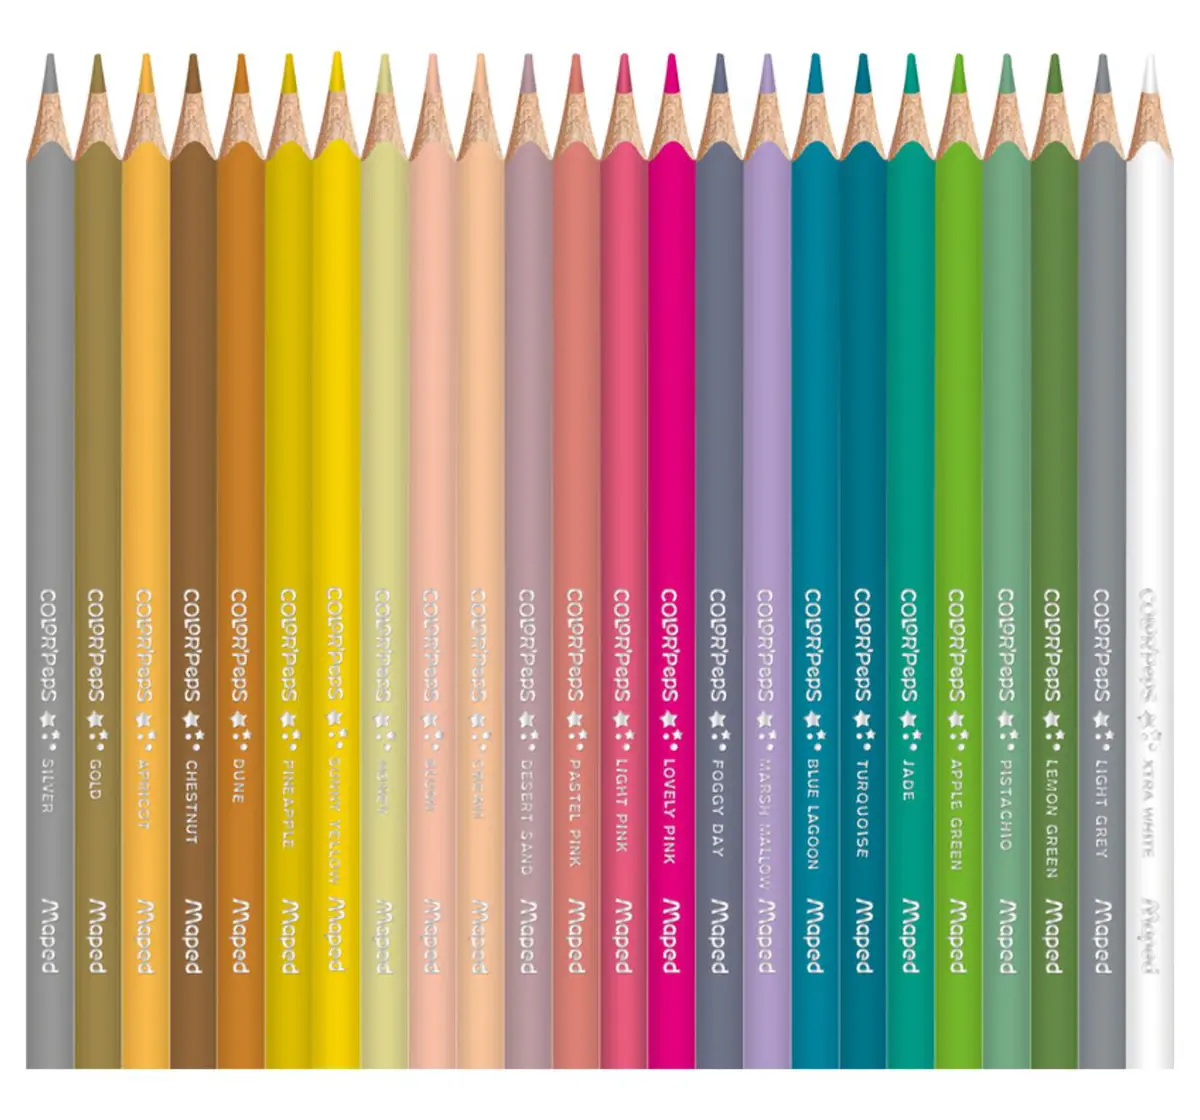 Maped 72 Colour Pencils, 7Y+ (Multicolour)